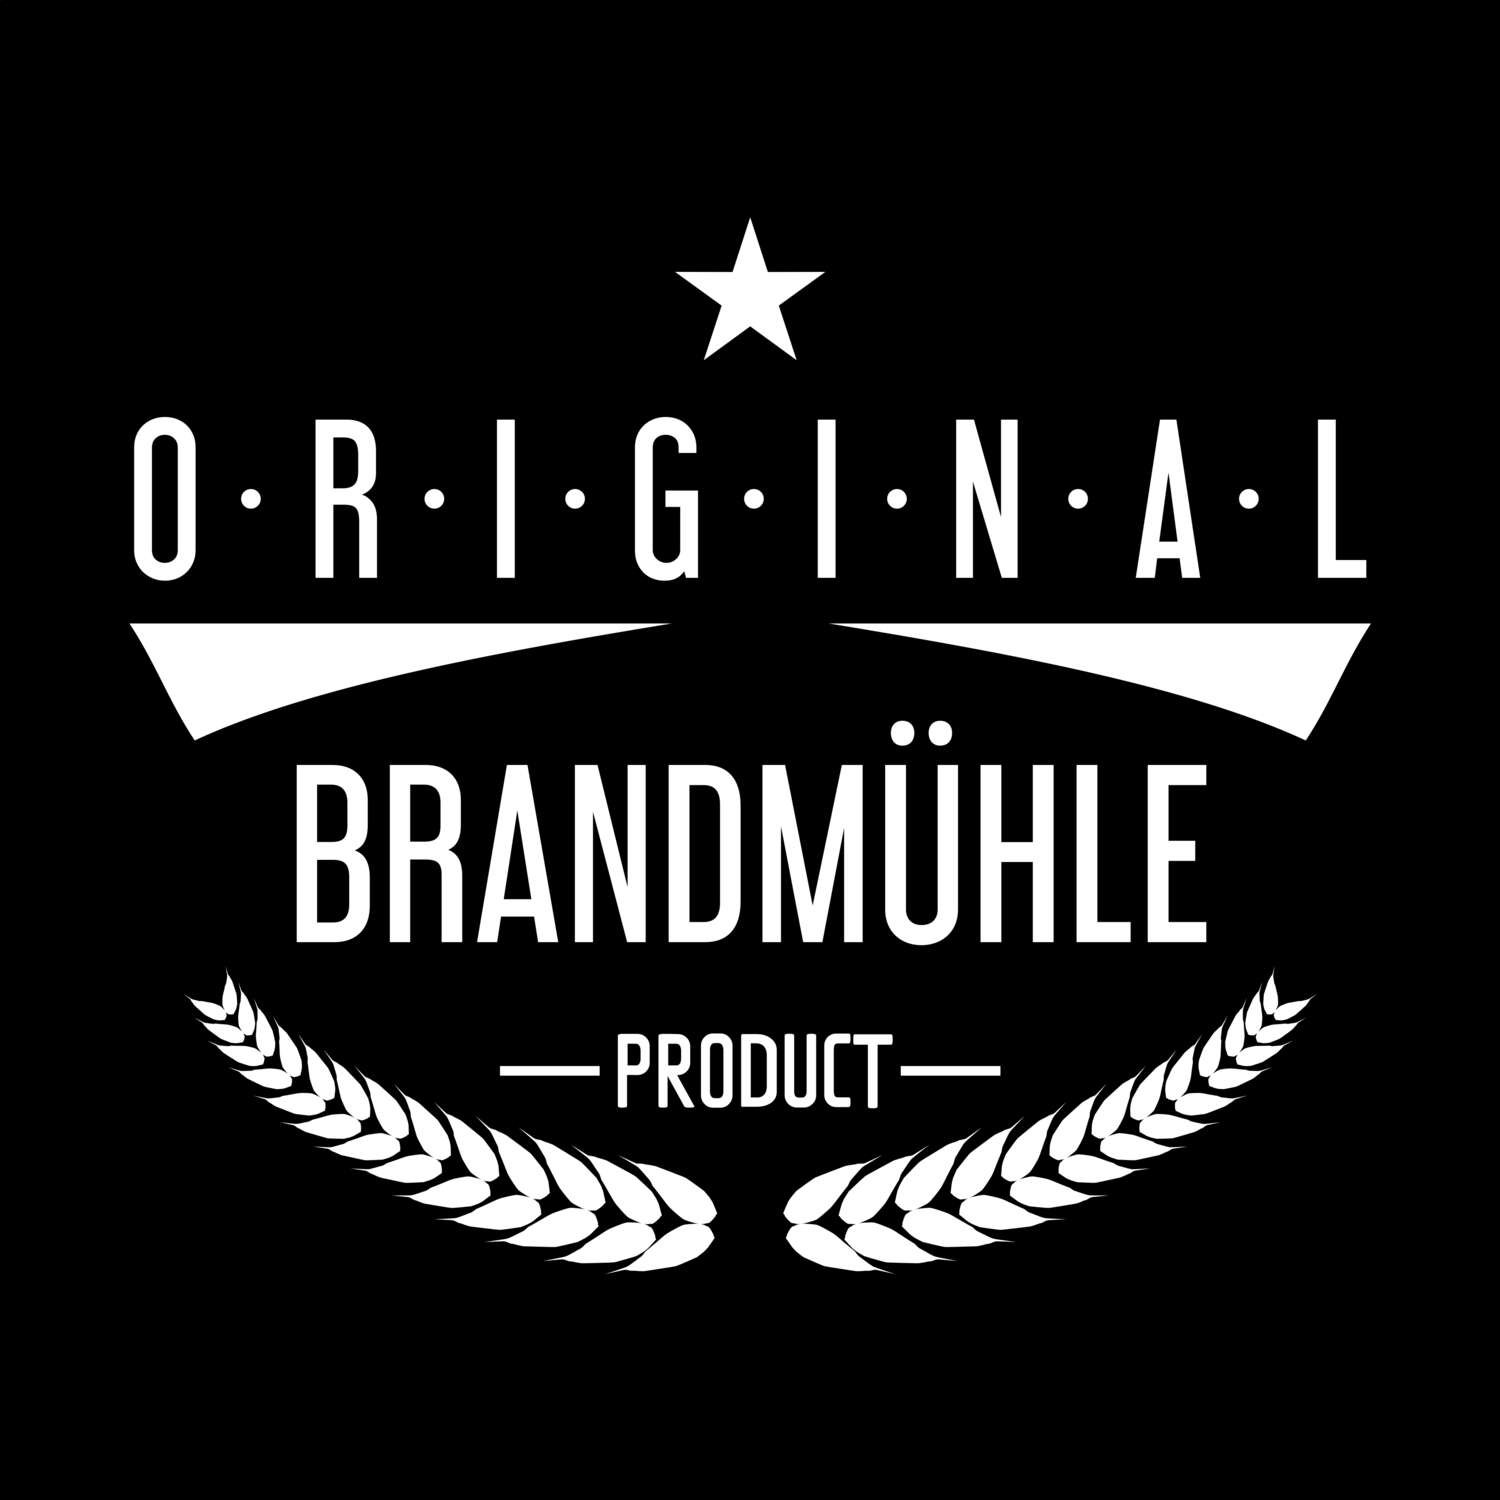 Brandmühle T-Shirt »Original Product«